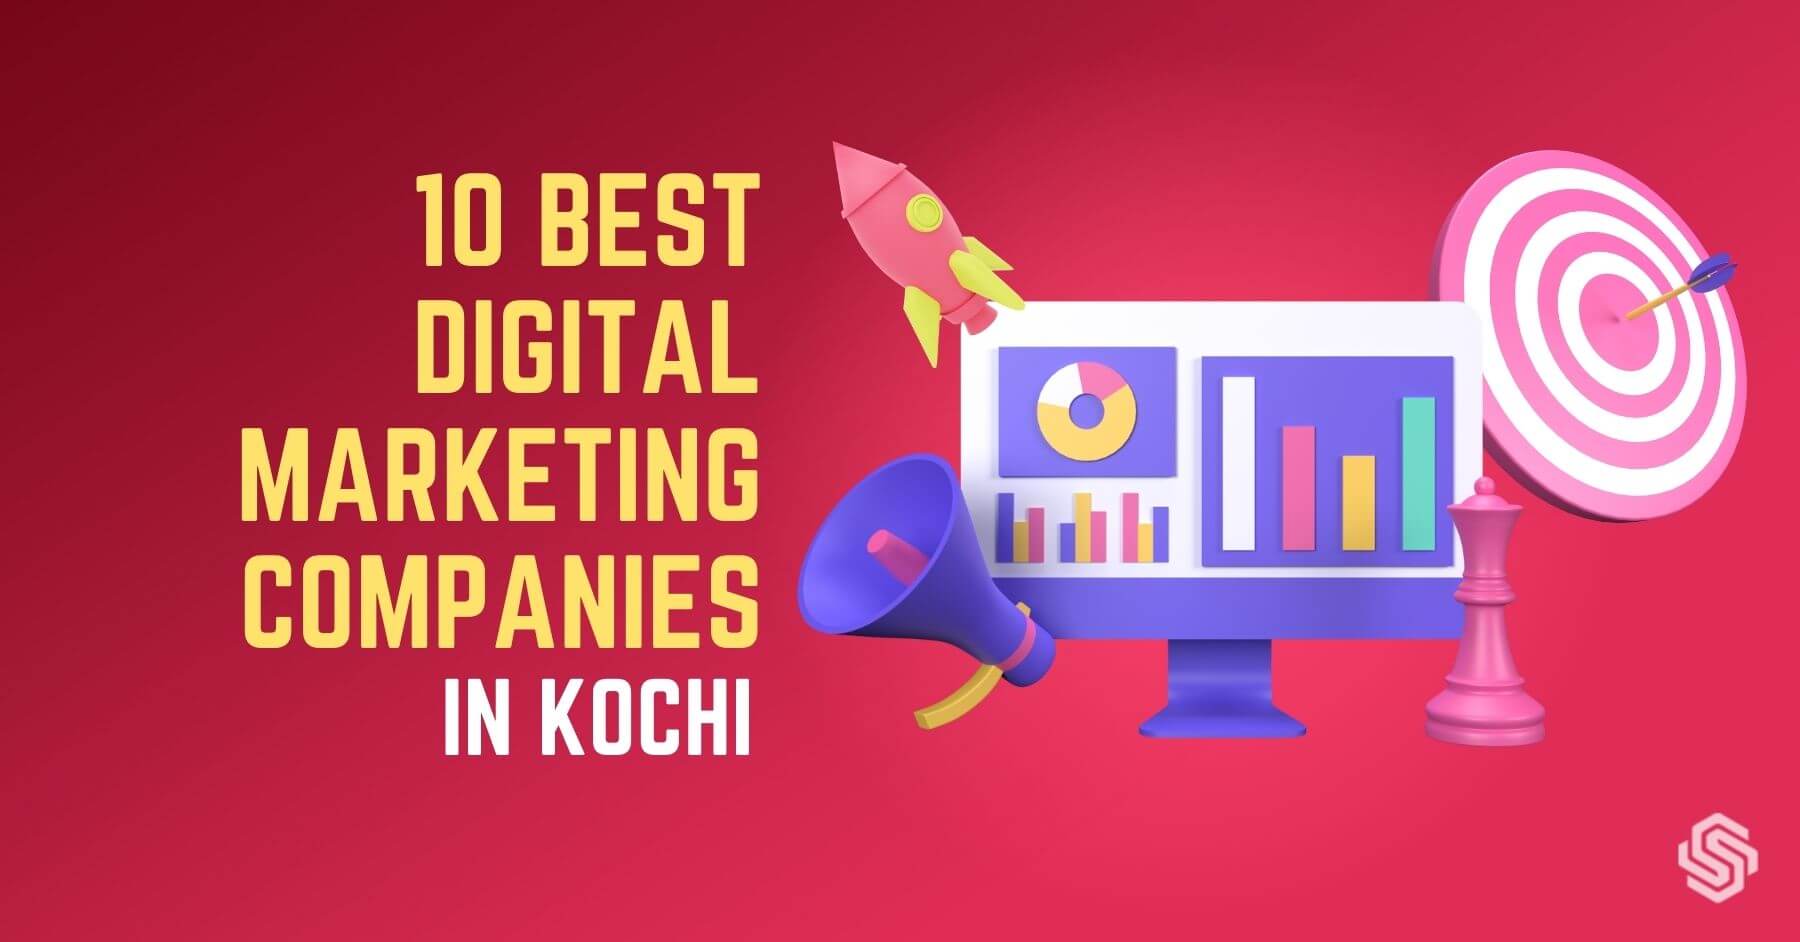 10 Best Digital Marketing Companies in Kochi